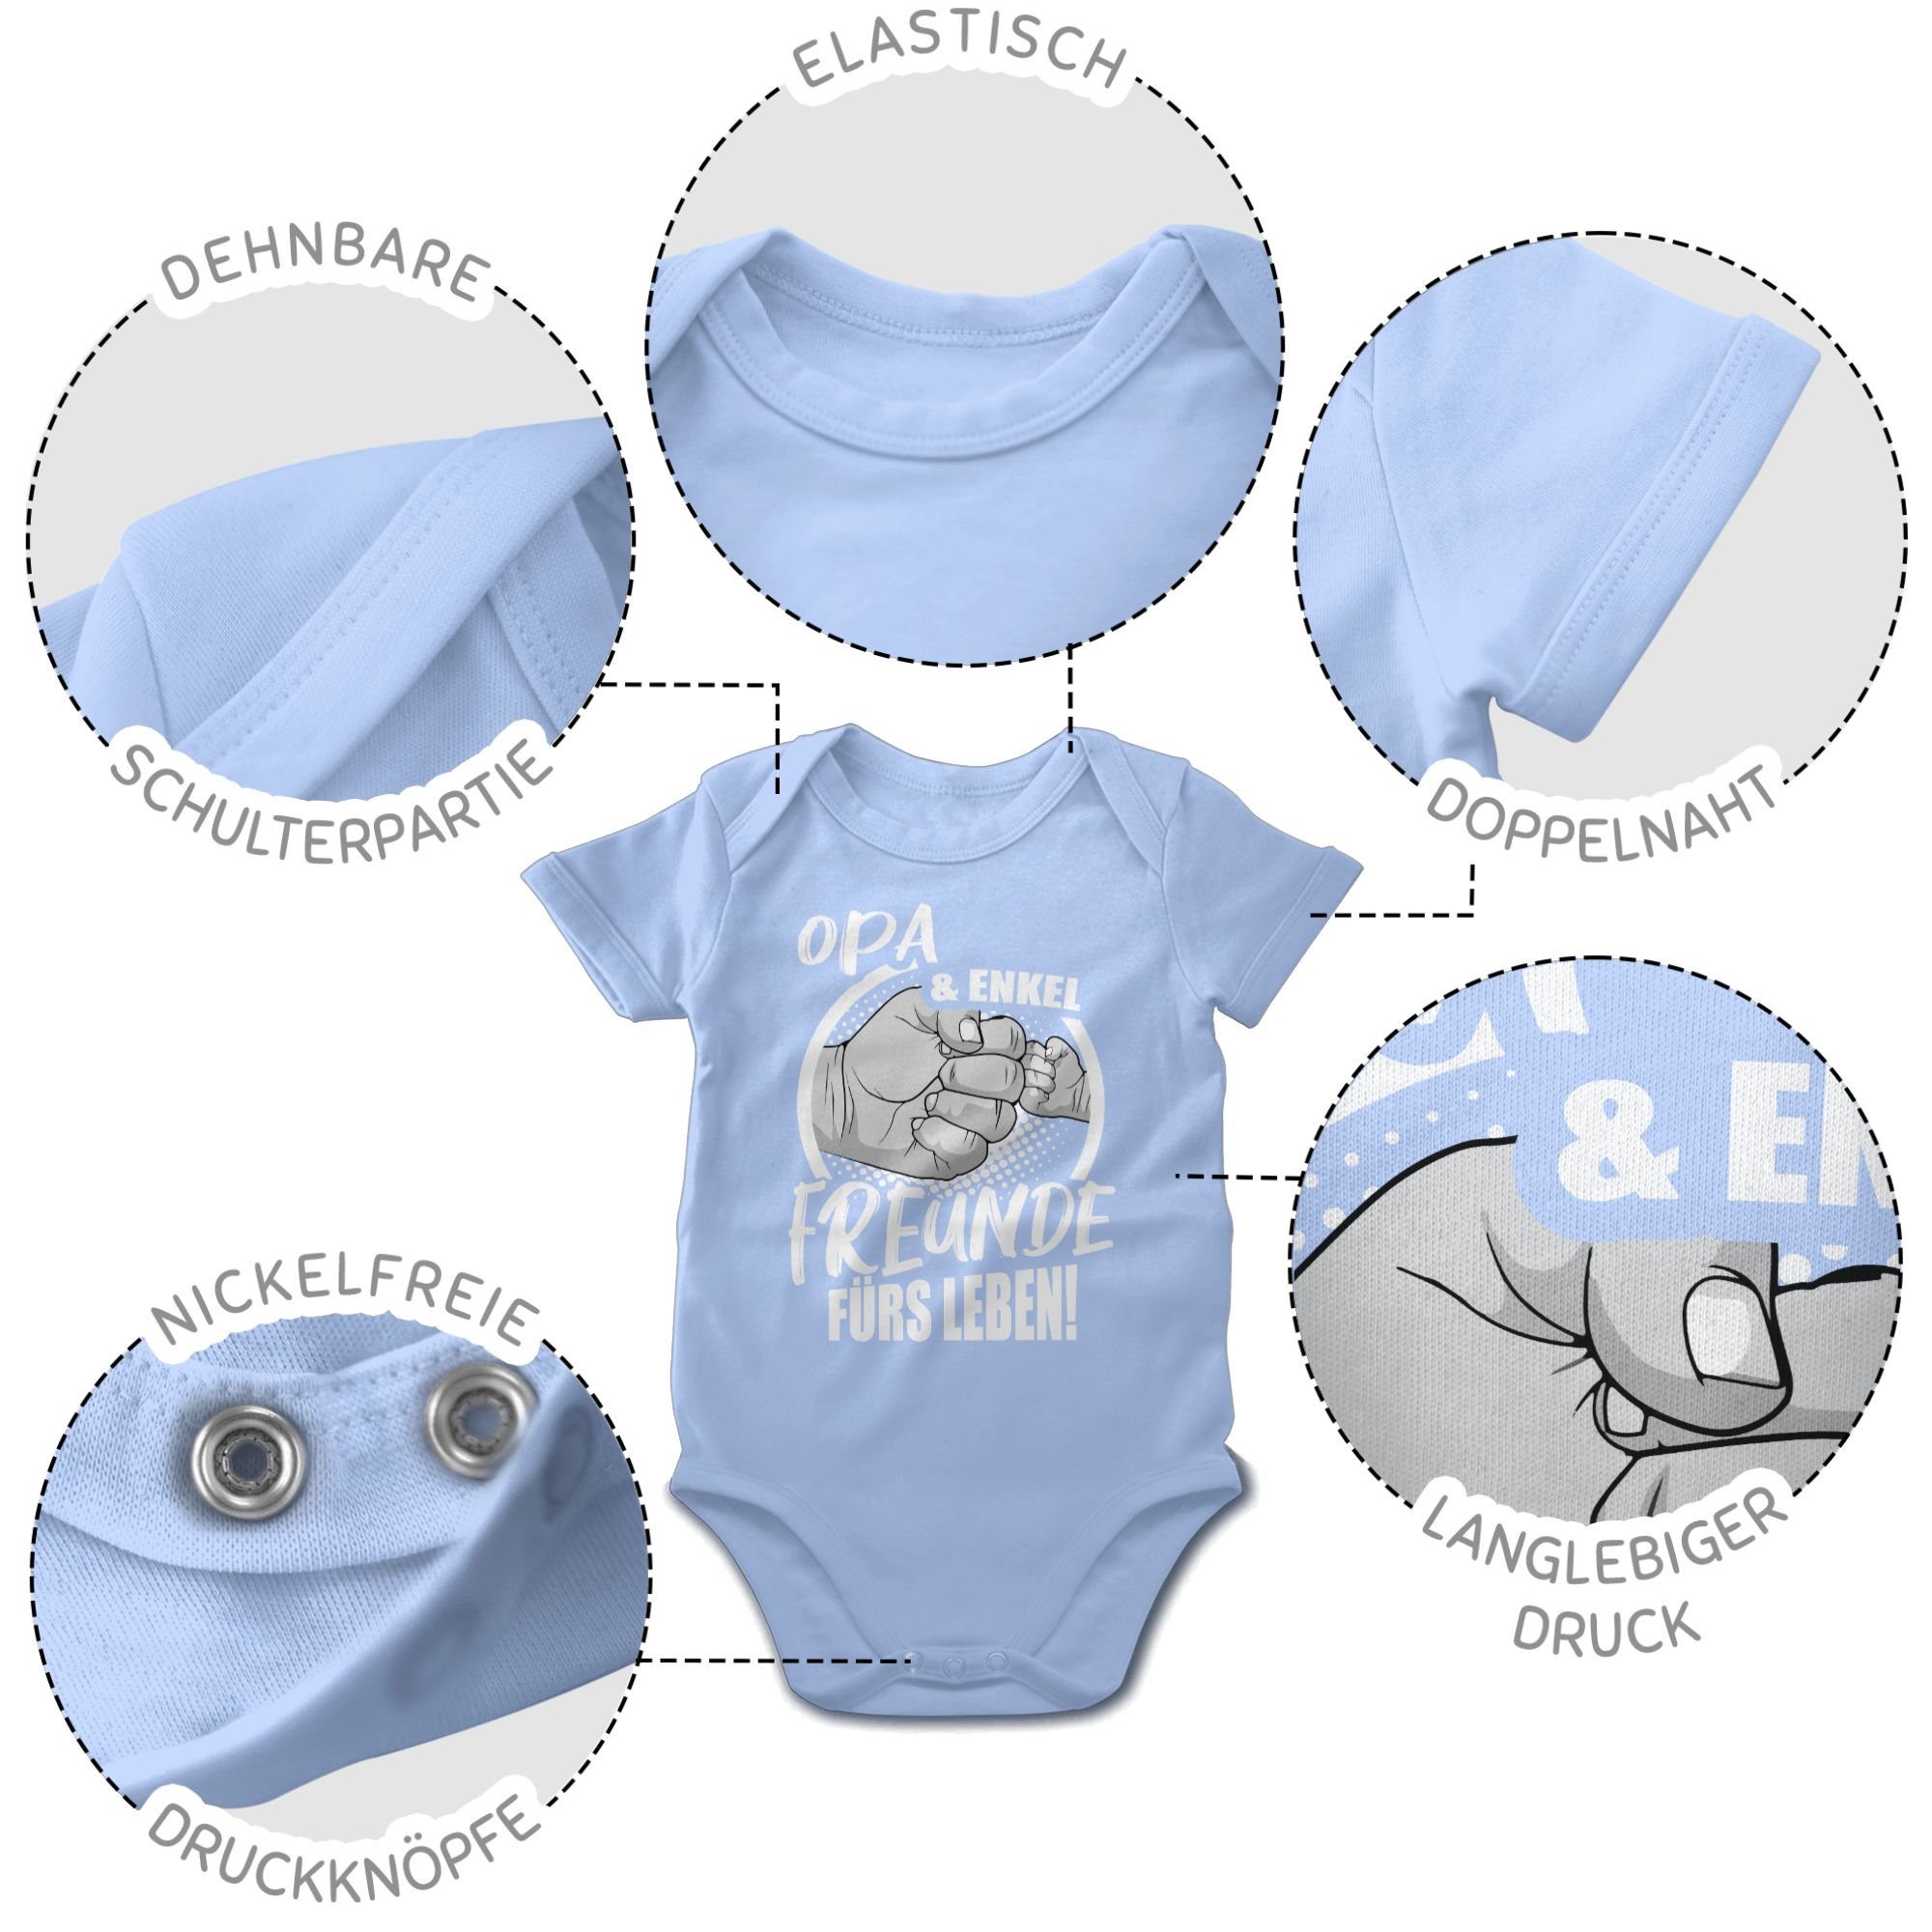 Shirtracer Shirtbody Opa & Enkel fürs Baby Babyblau 3 Partner-Look Familie Freunde Leben